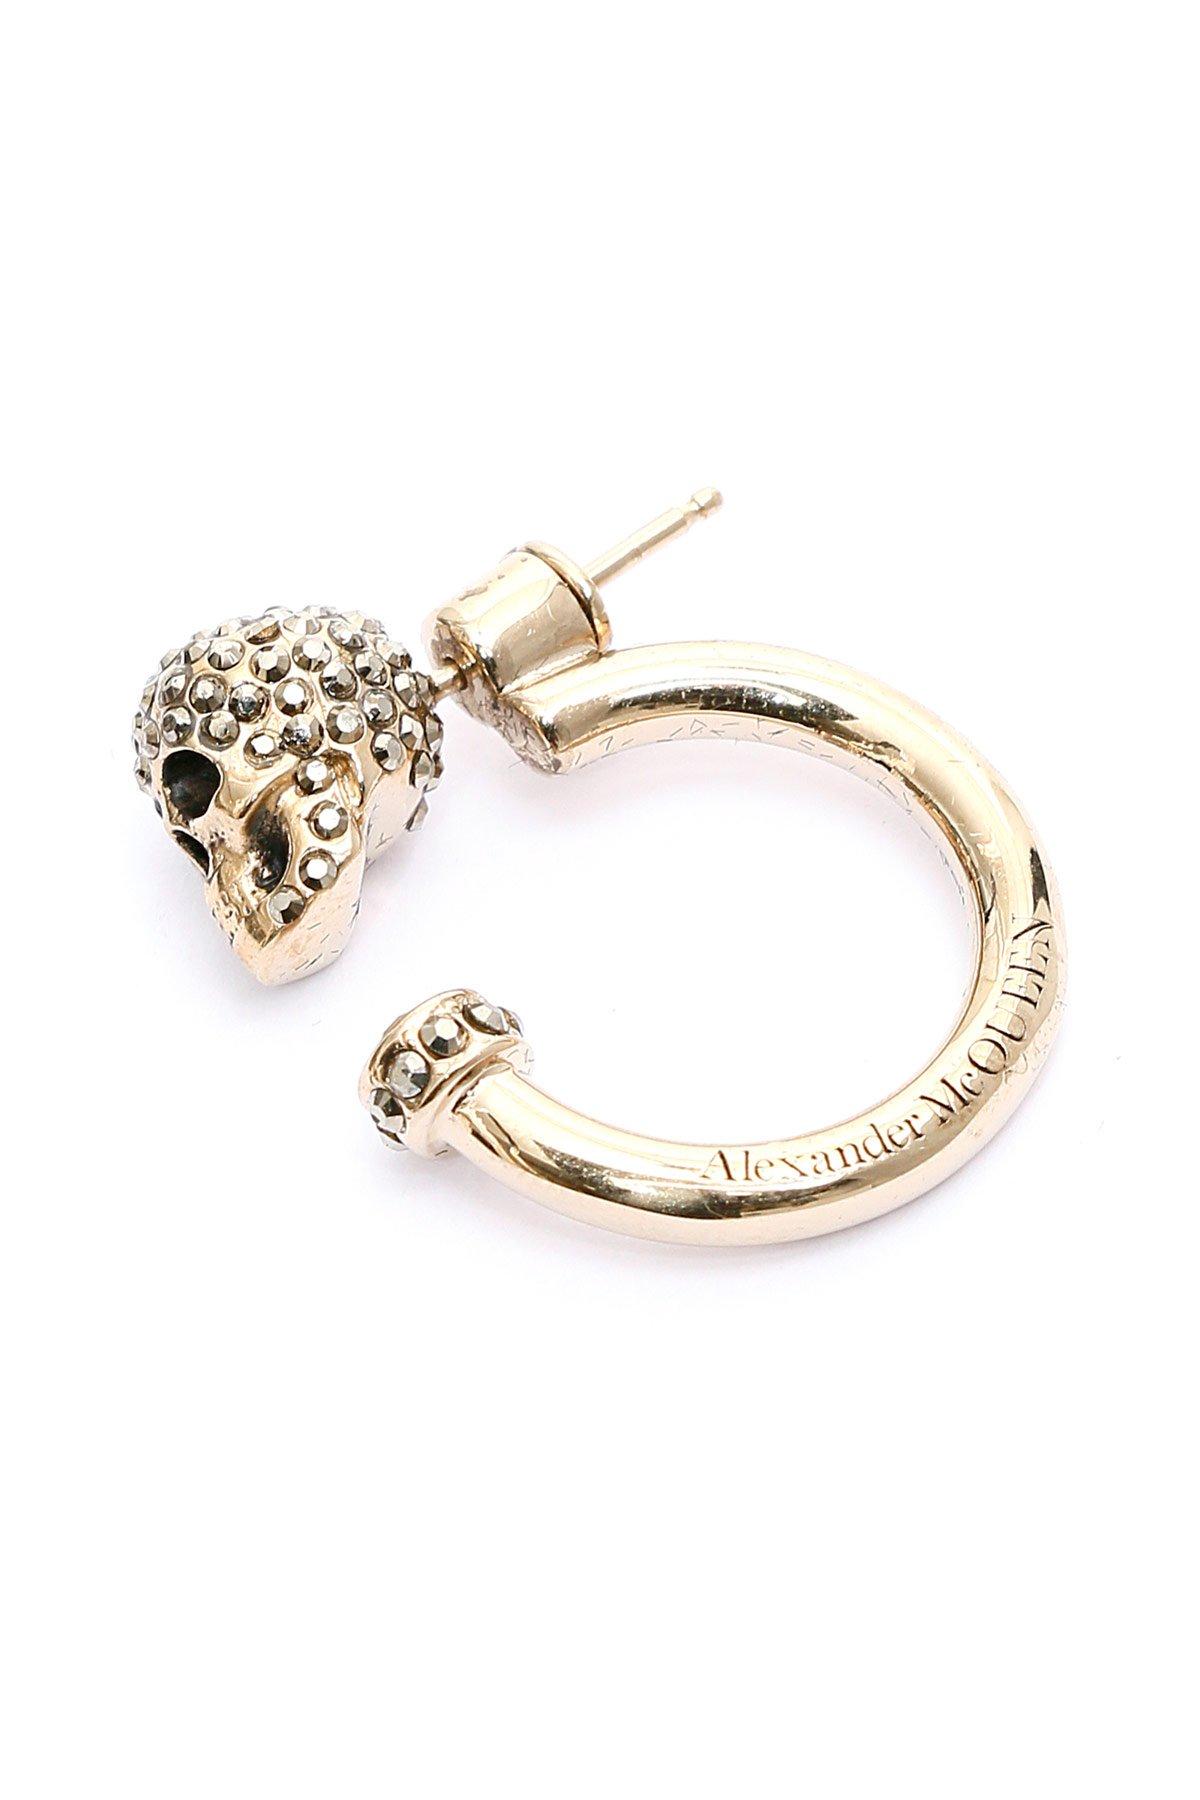 Alexander McQueen Pave Skull Earrings in Gold (Metallic) - Lyst